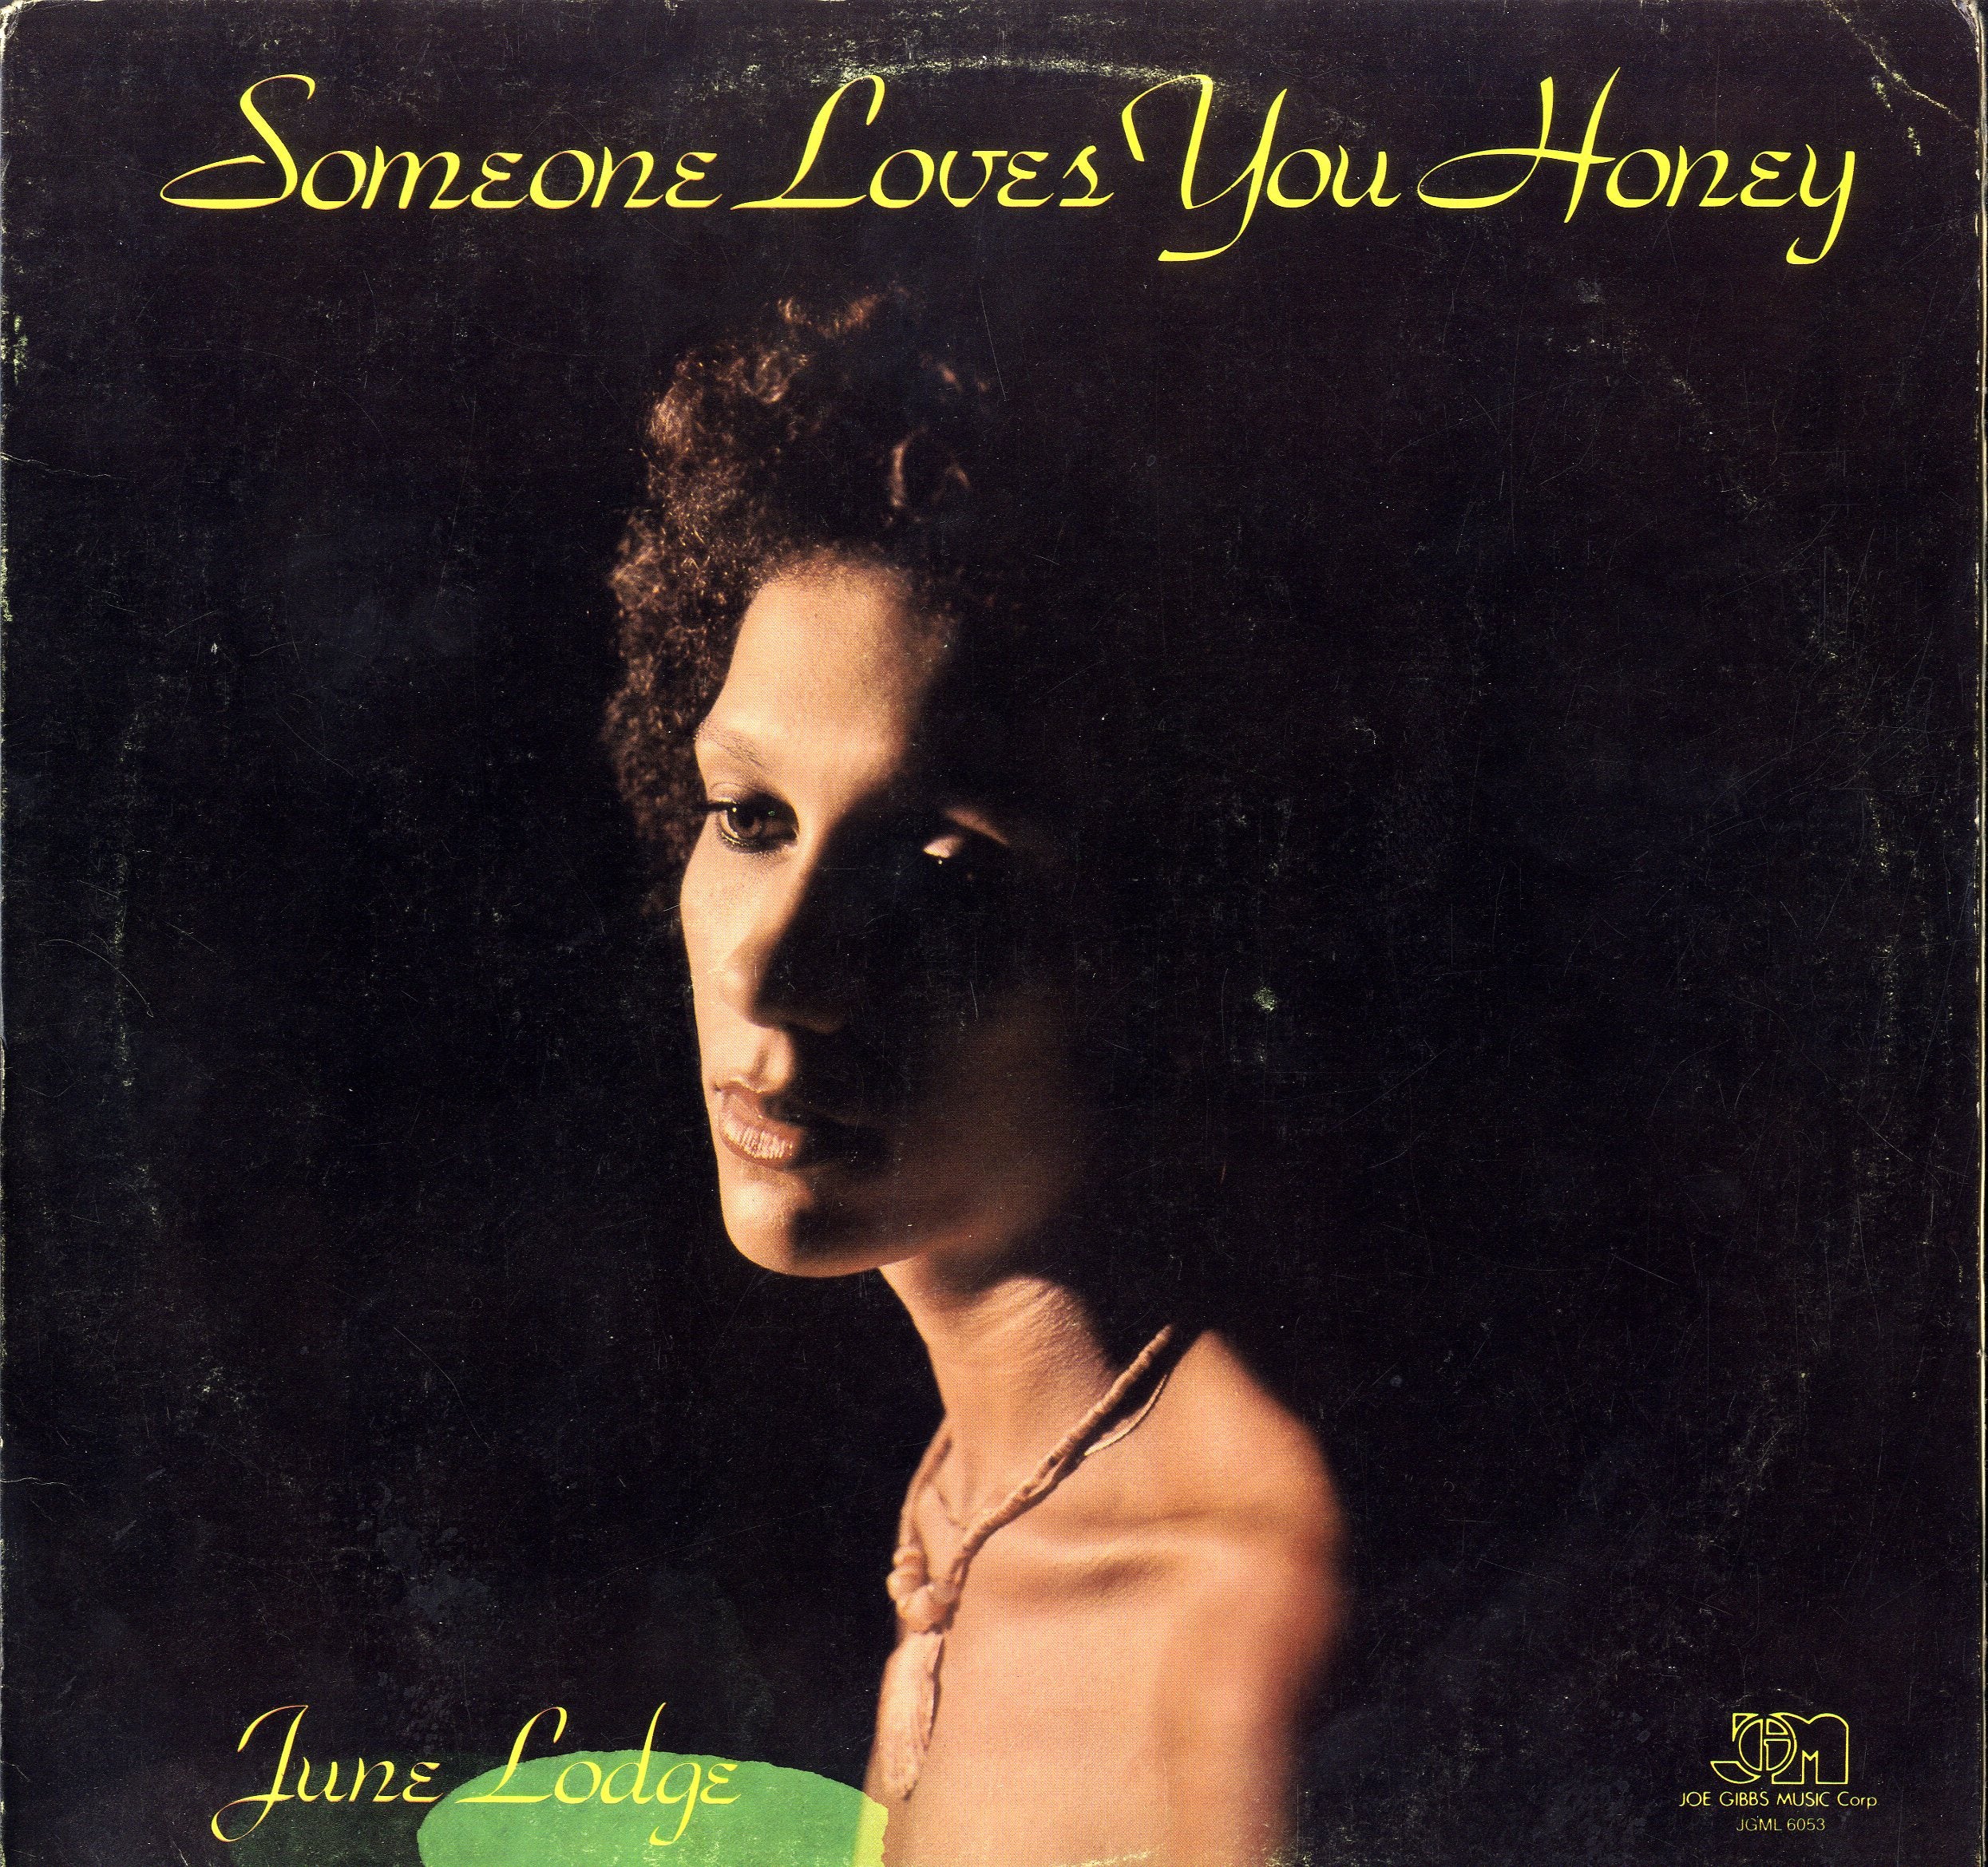 JUNE LODGE [Someone Loves You Honey]